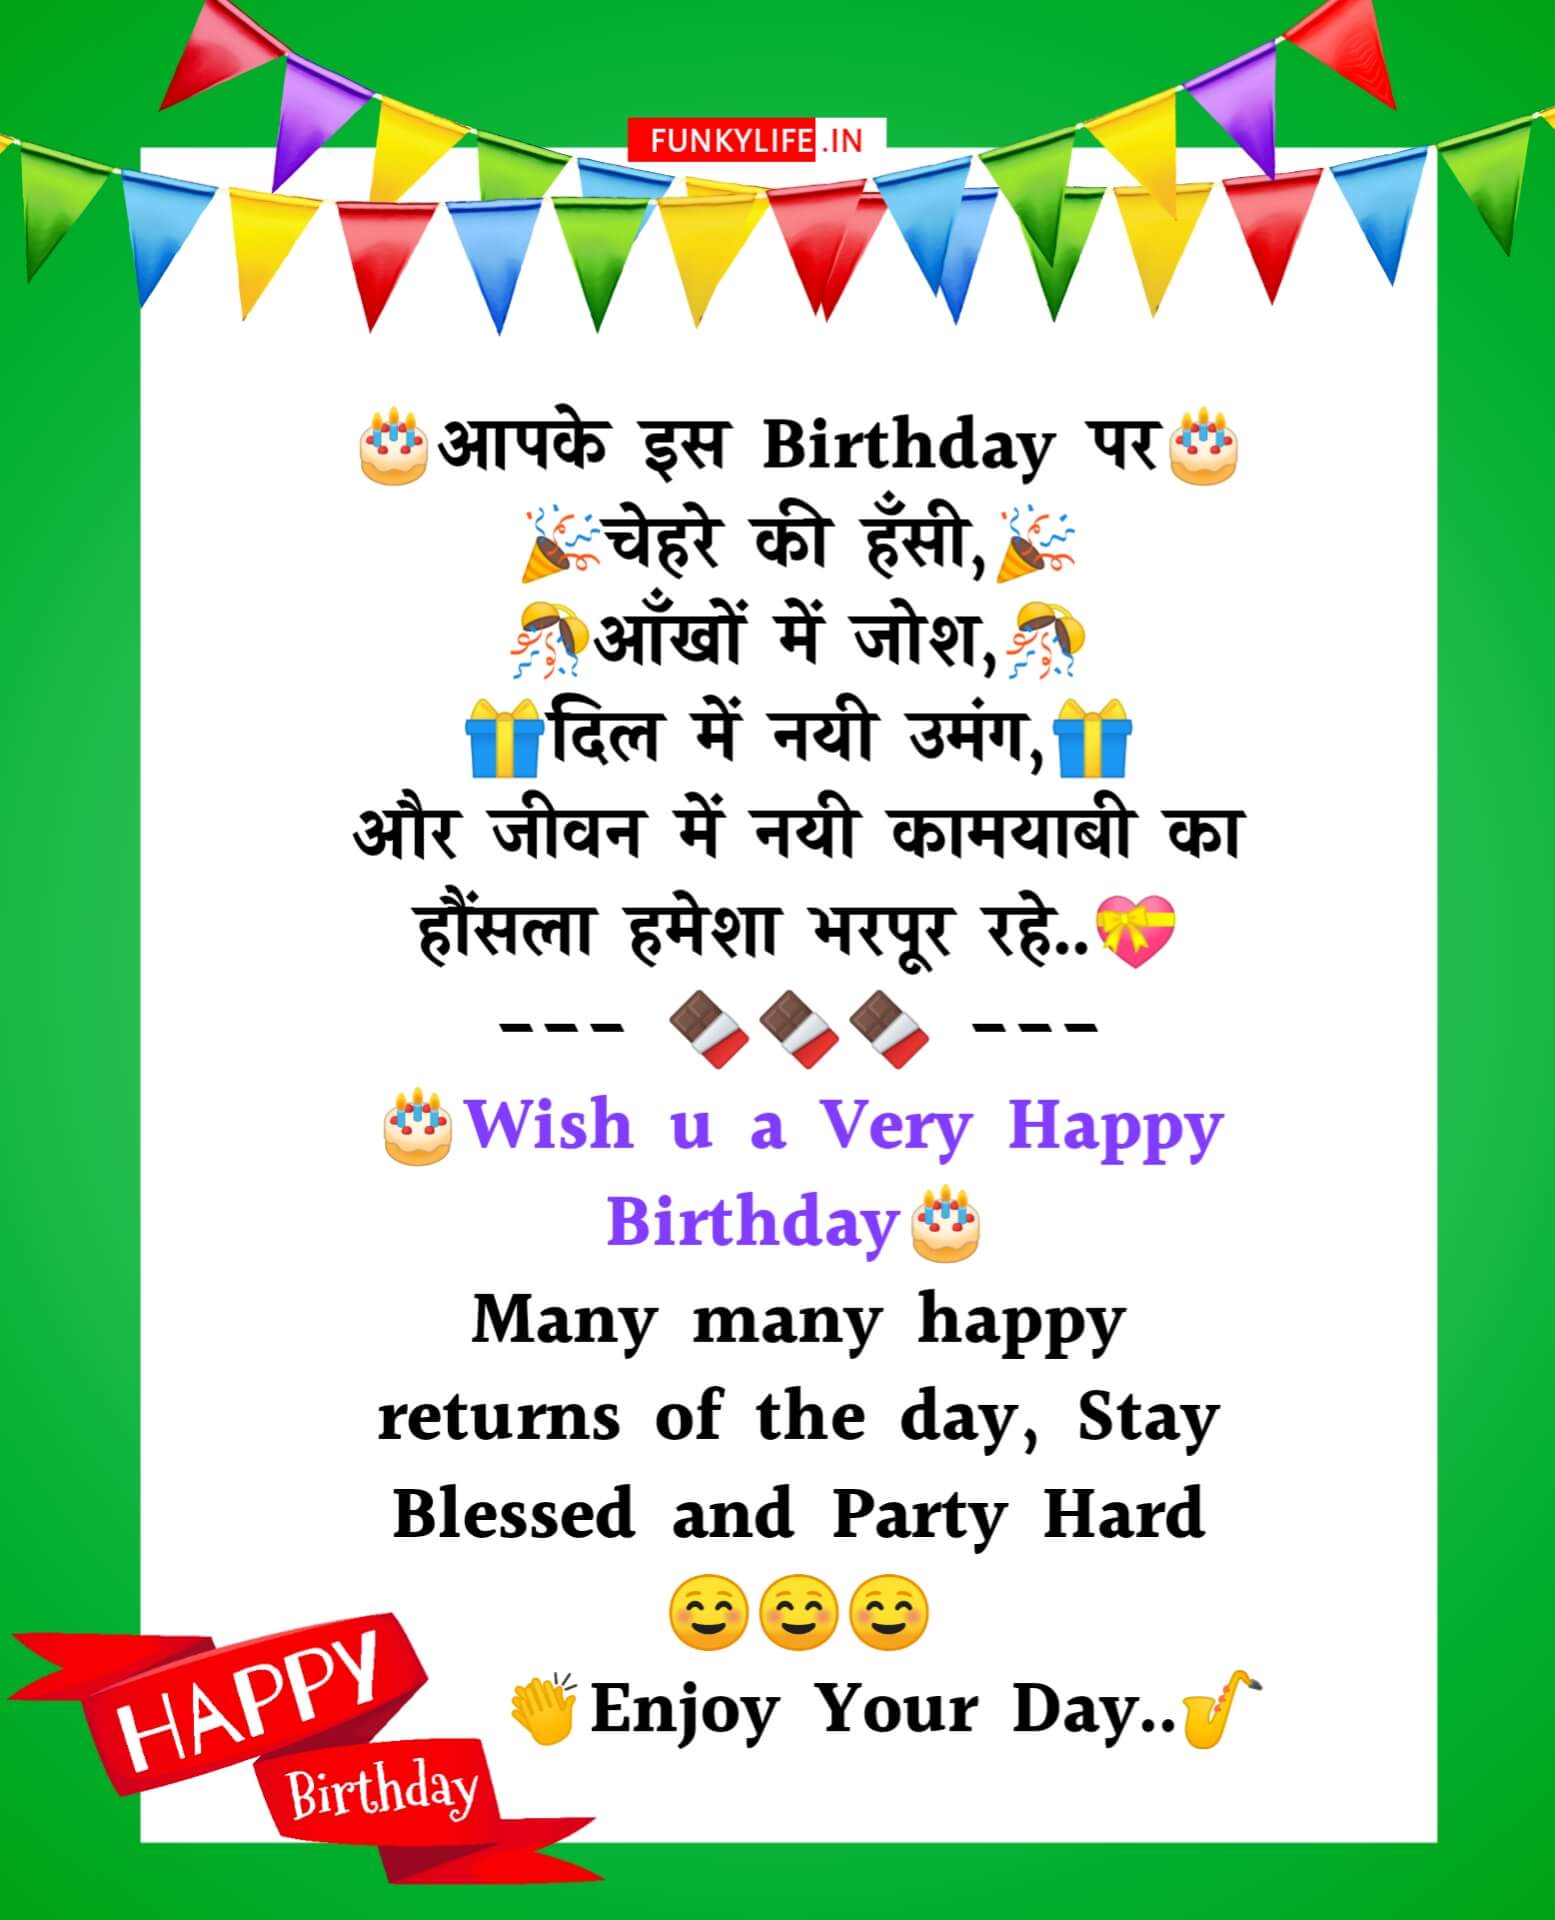 Sweet happy birthday wishes in Hindi